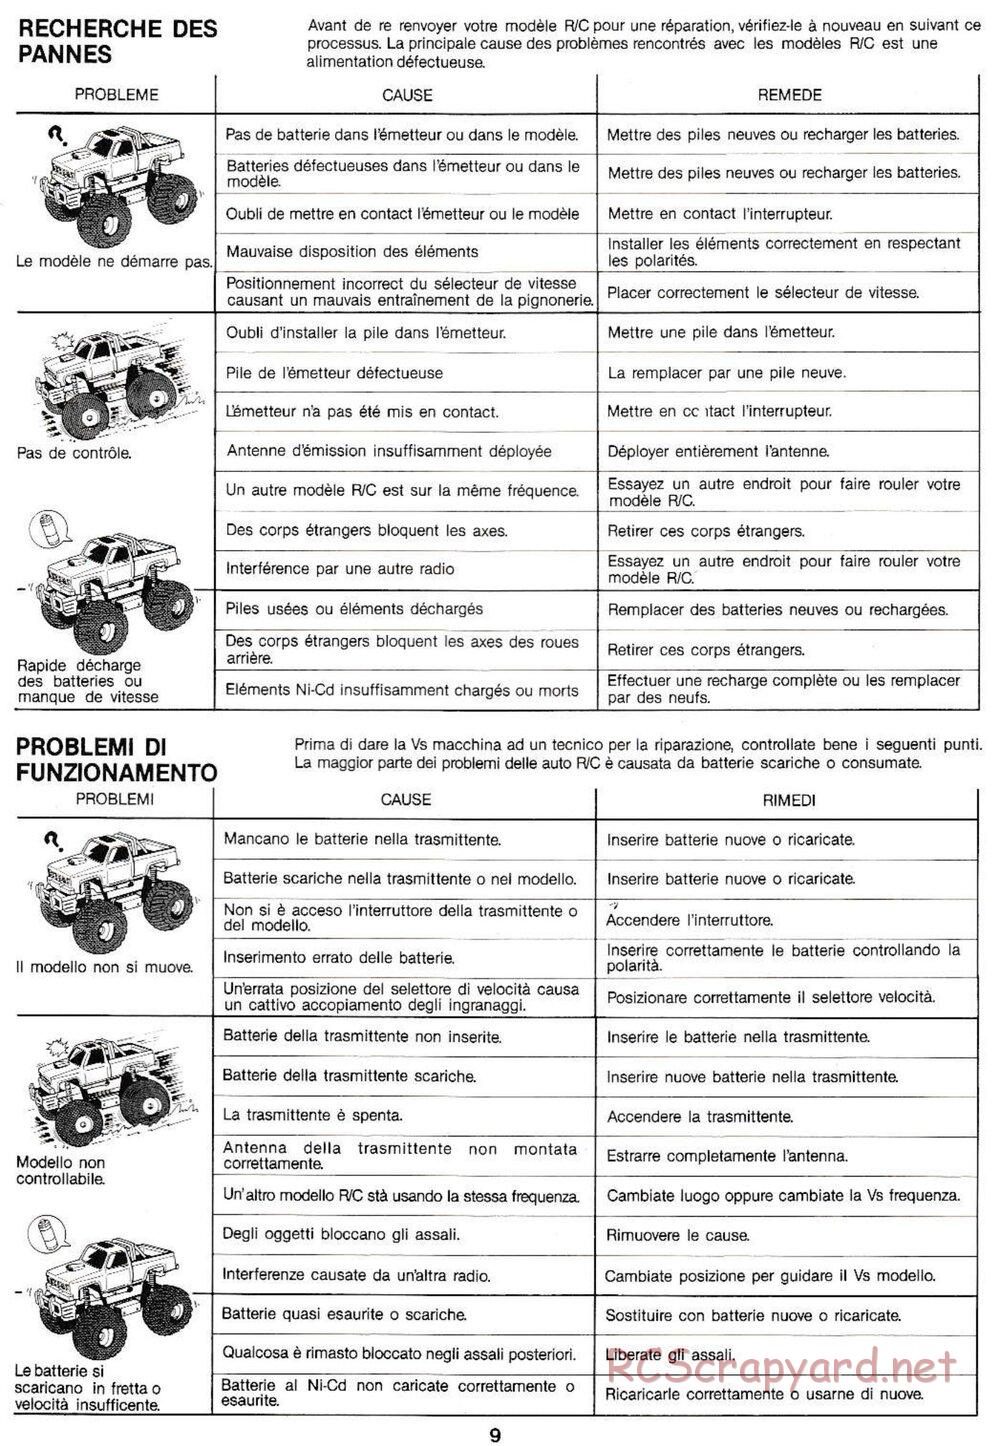 Tamiya - Clod Buster QD Chassis - Manual - Page 9